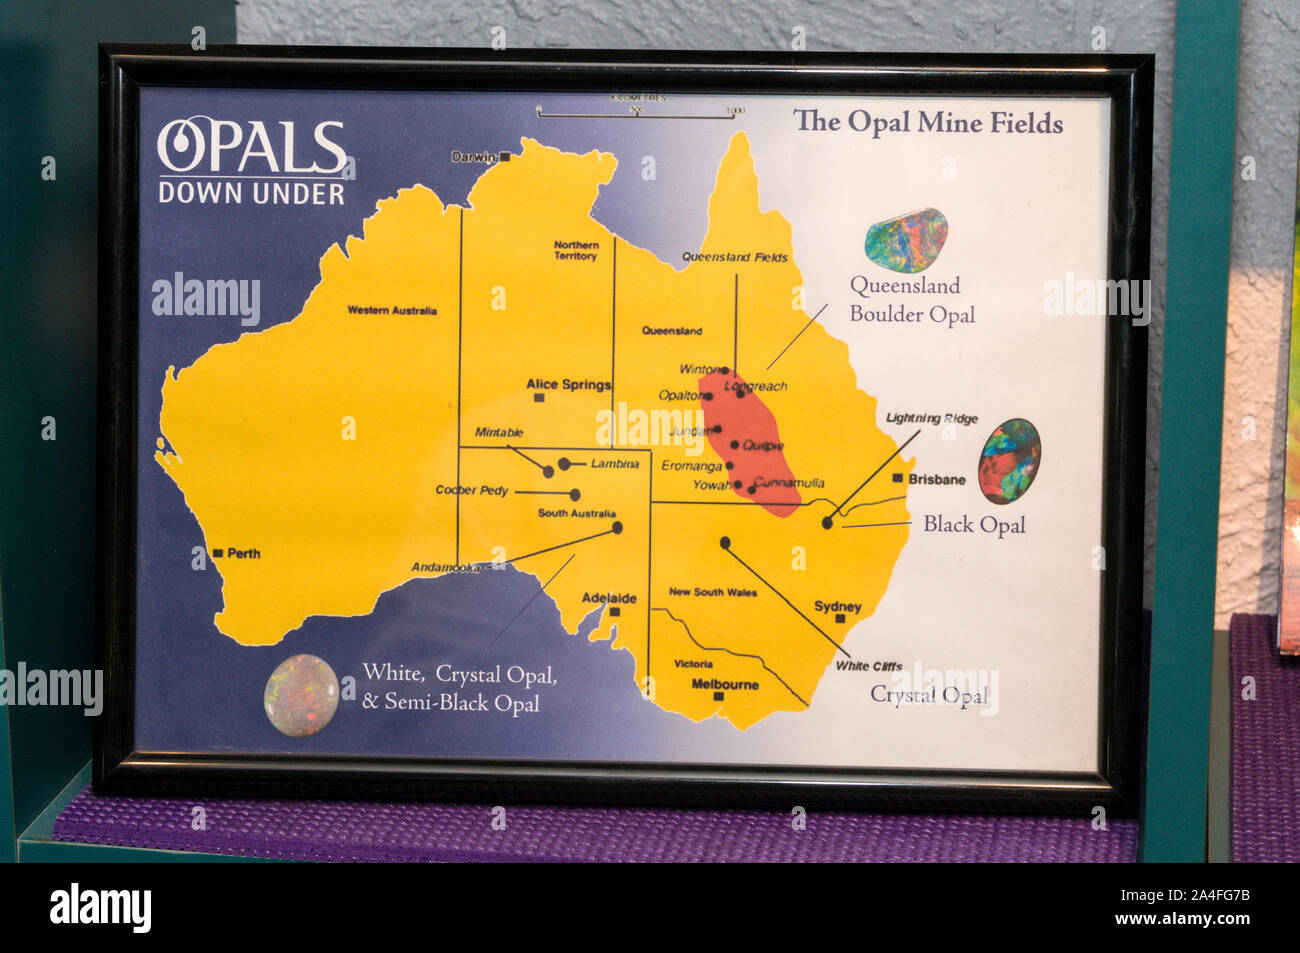 A map of Australia showing the mine fields where Opal gems are found Opal  is Australia's national gemstone Stock Photo - Alamy